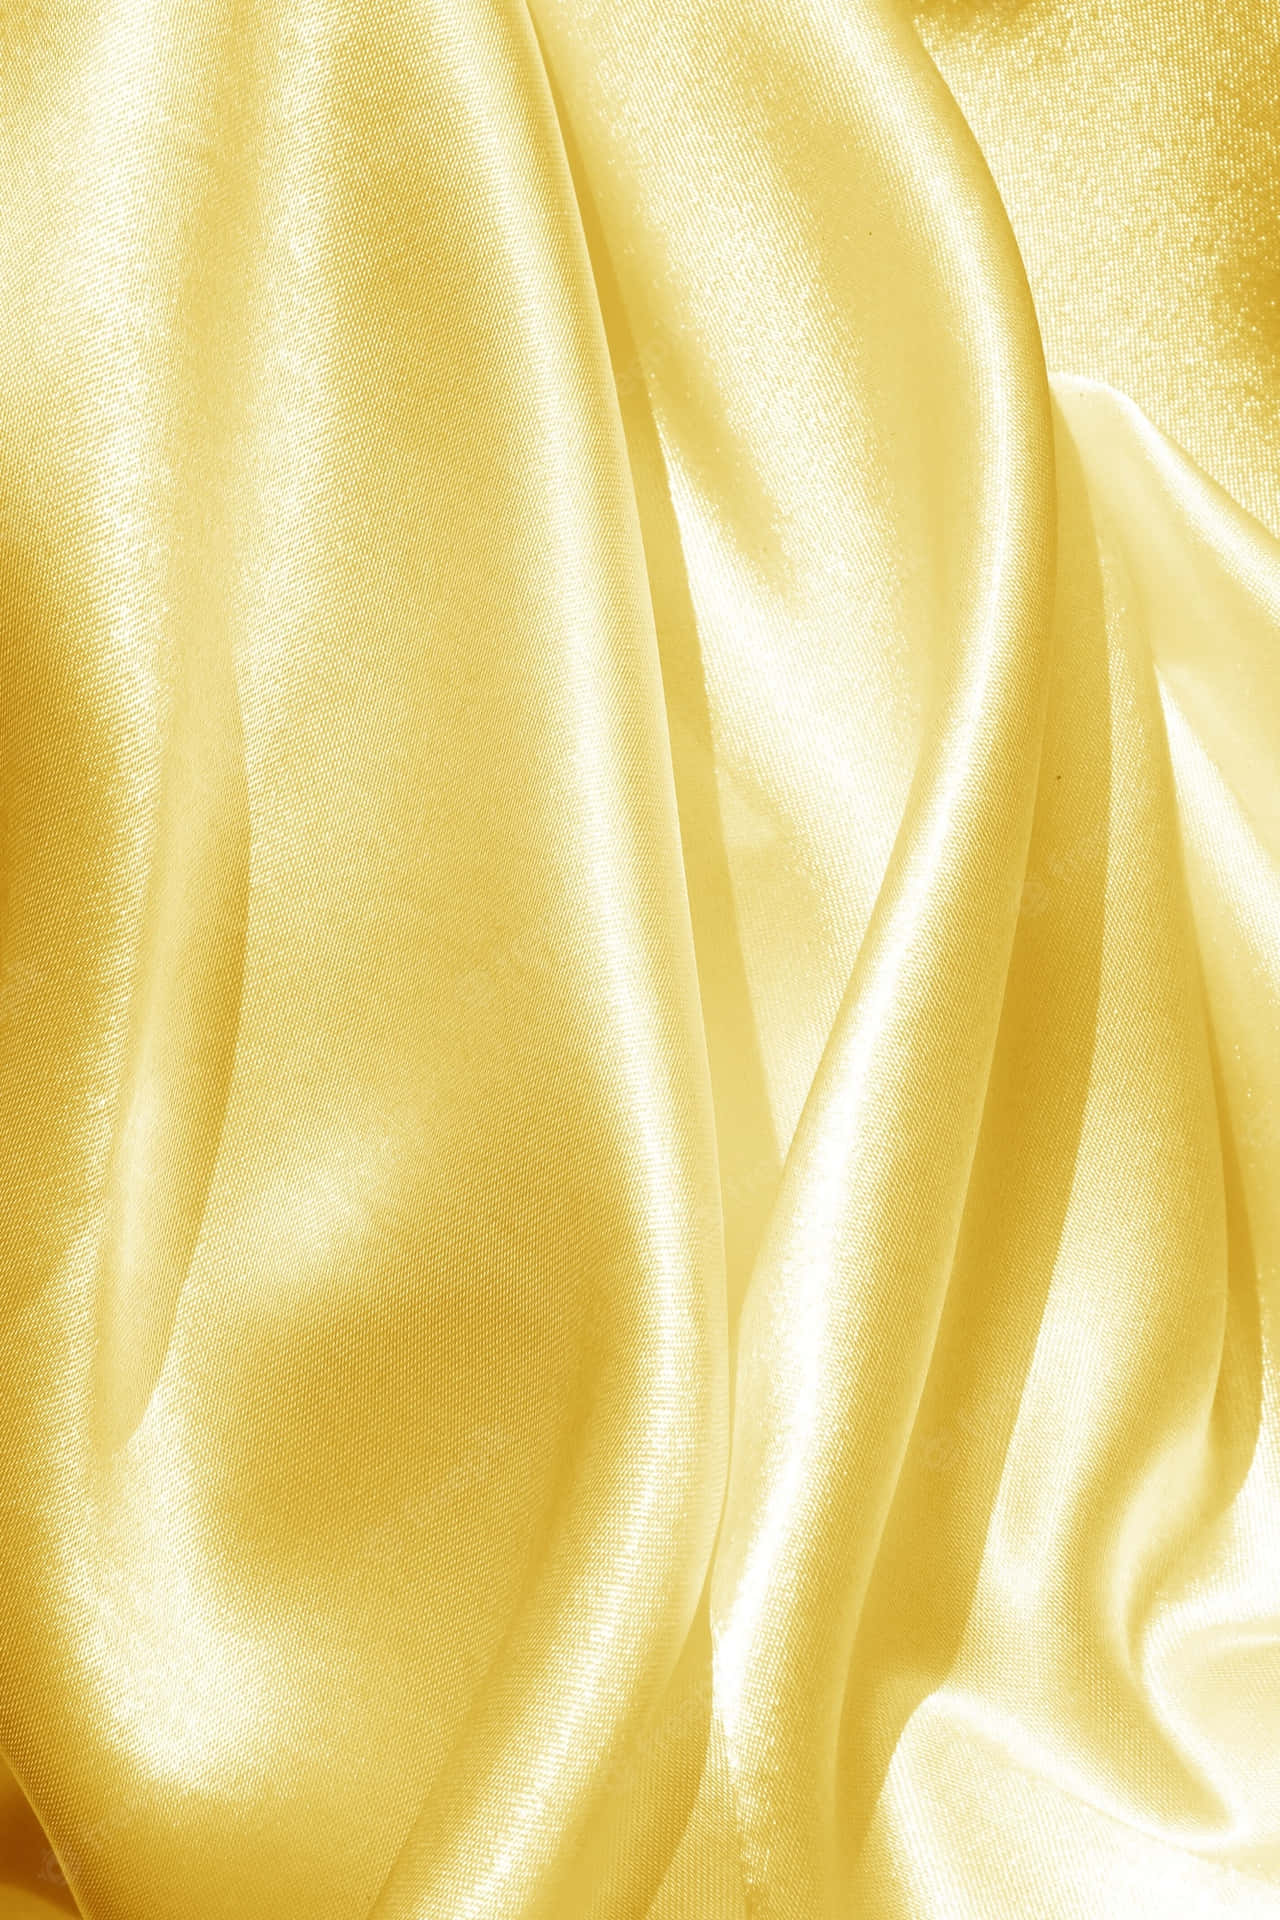 Let The Light Shine Through - Gold Silk Wallpaper